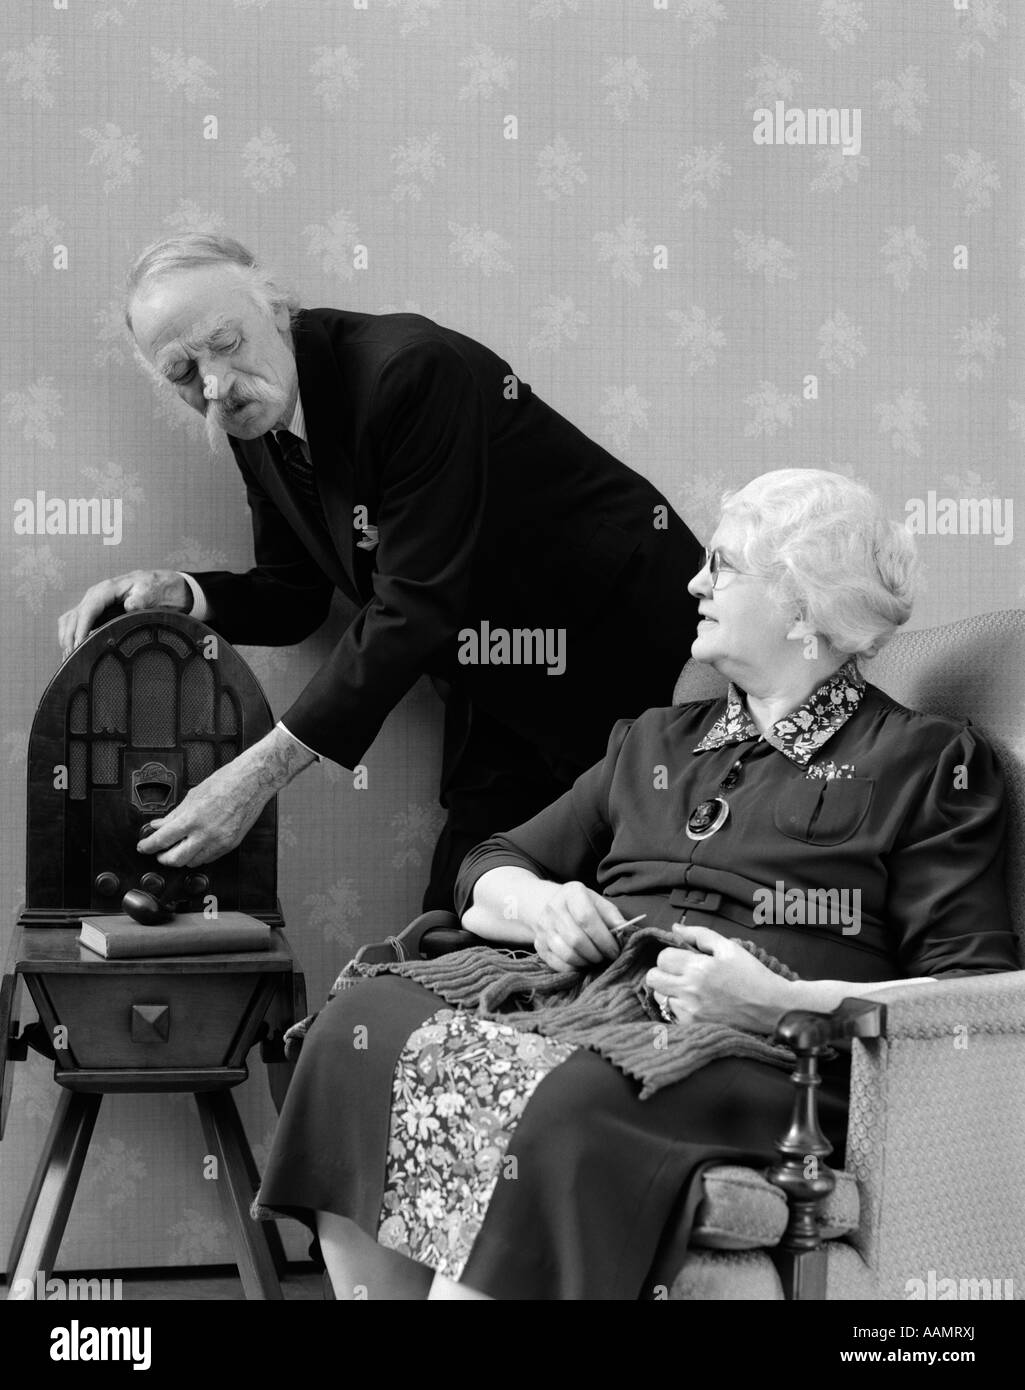 1940s ELDERLY COUPLE LISTENING TO RADIO WHILE SHE KNITS Stock Photo